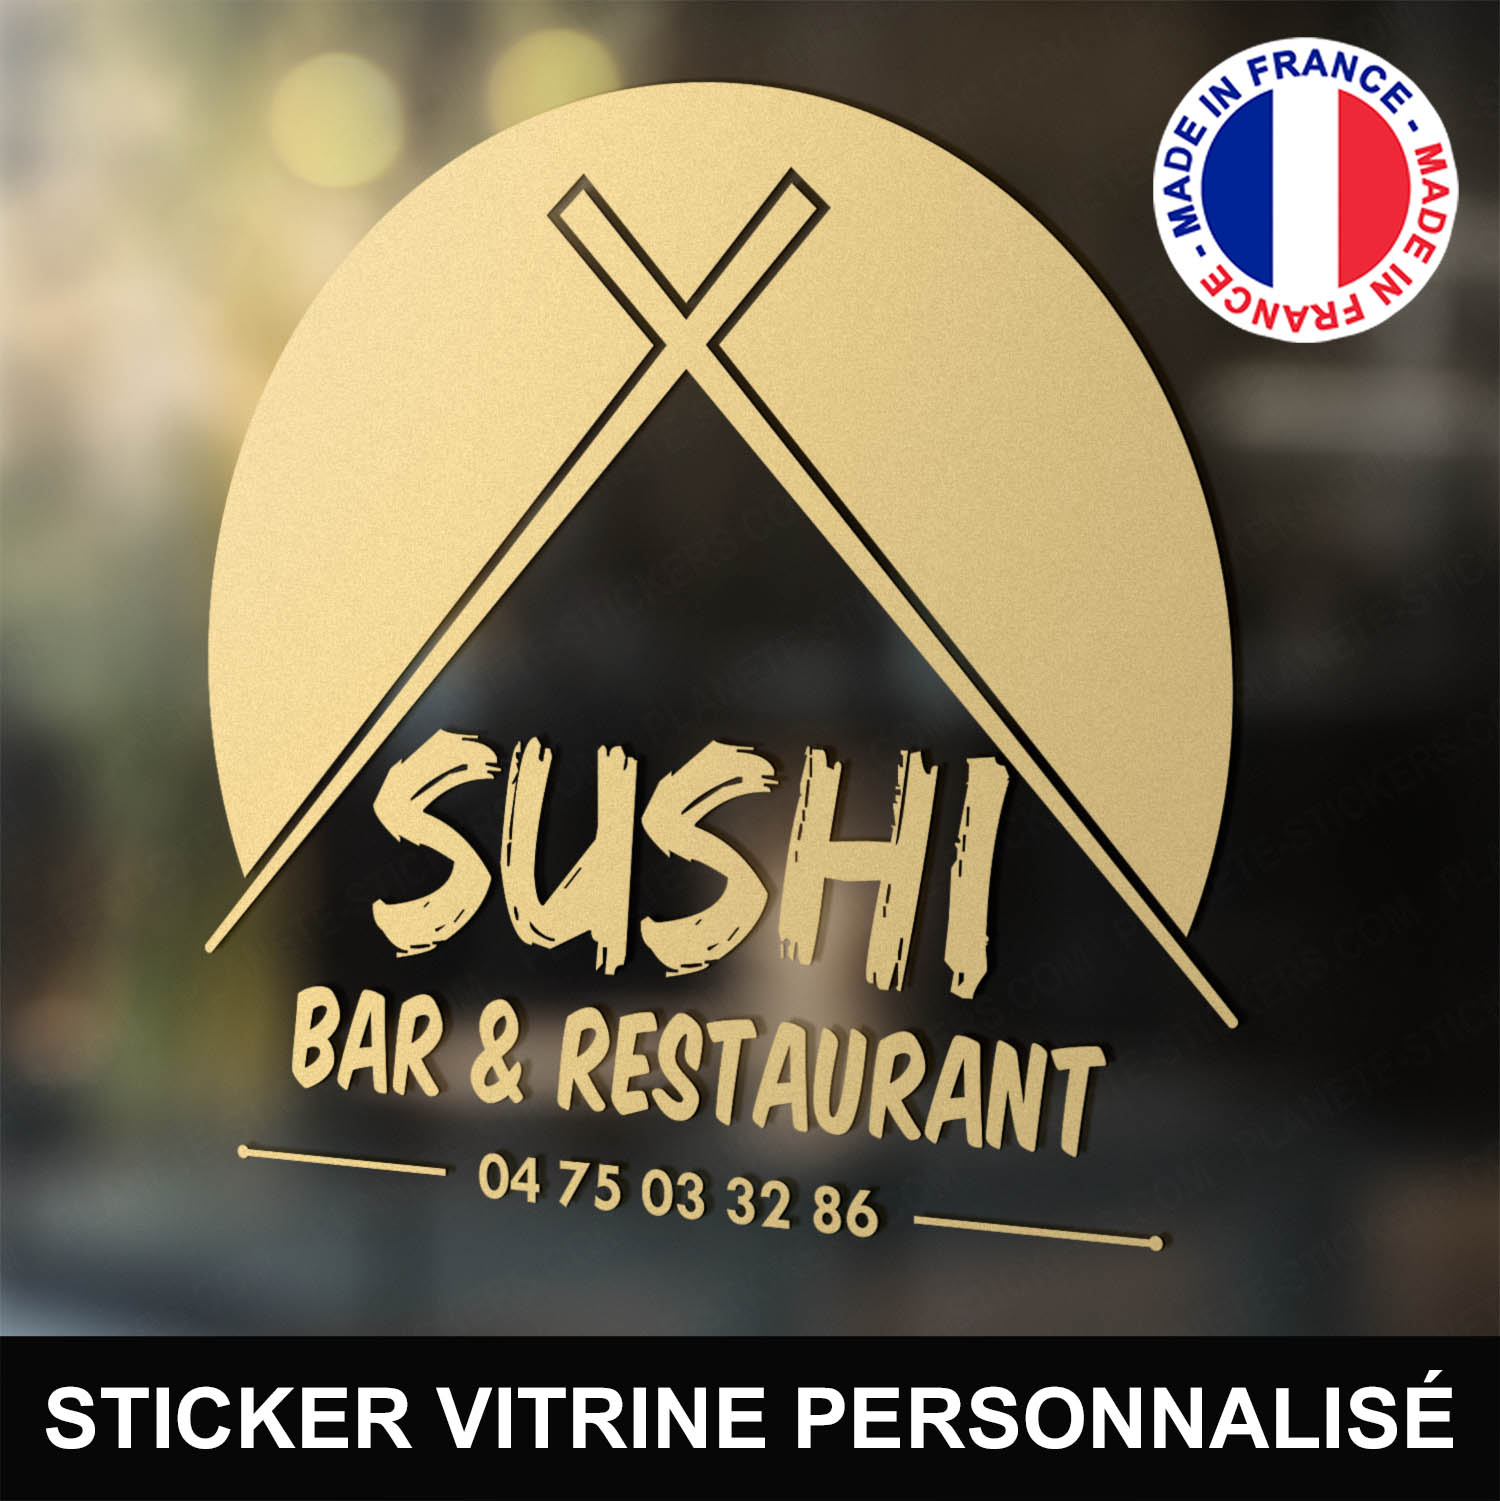 ref2sushivitrine-stickers-restaurant-vitrine-sticker-personnalisé-autocollant-sushi-bar-baguette-soleil-professionnel